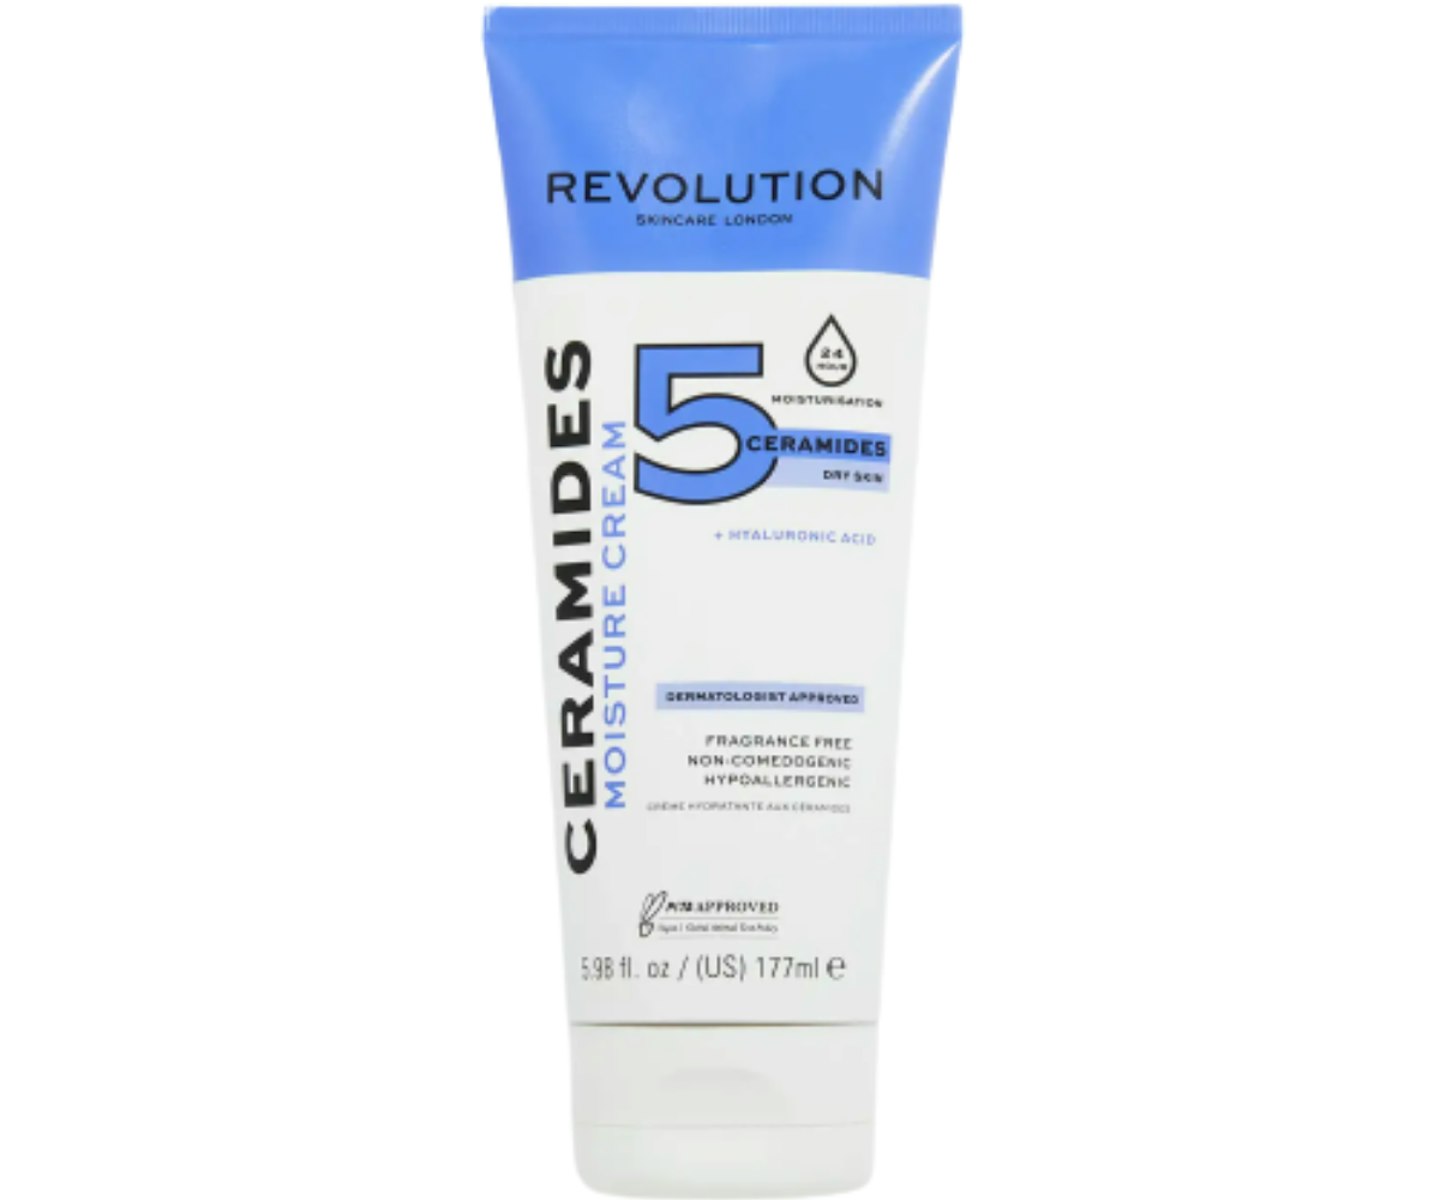 A picture of the Revolution Skincare Ceramides Moisture Cream